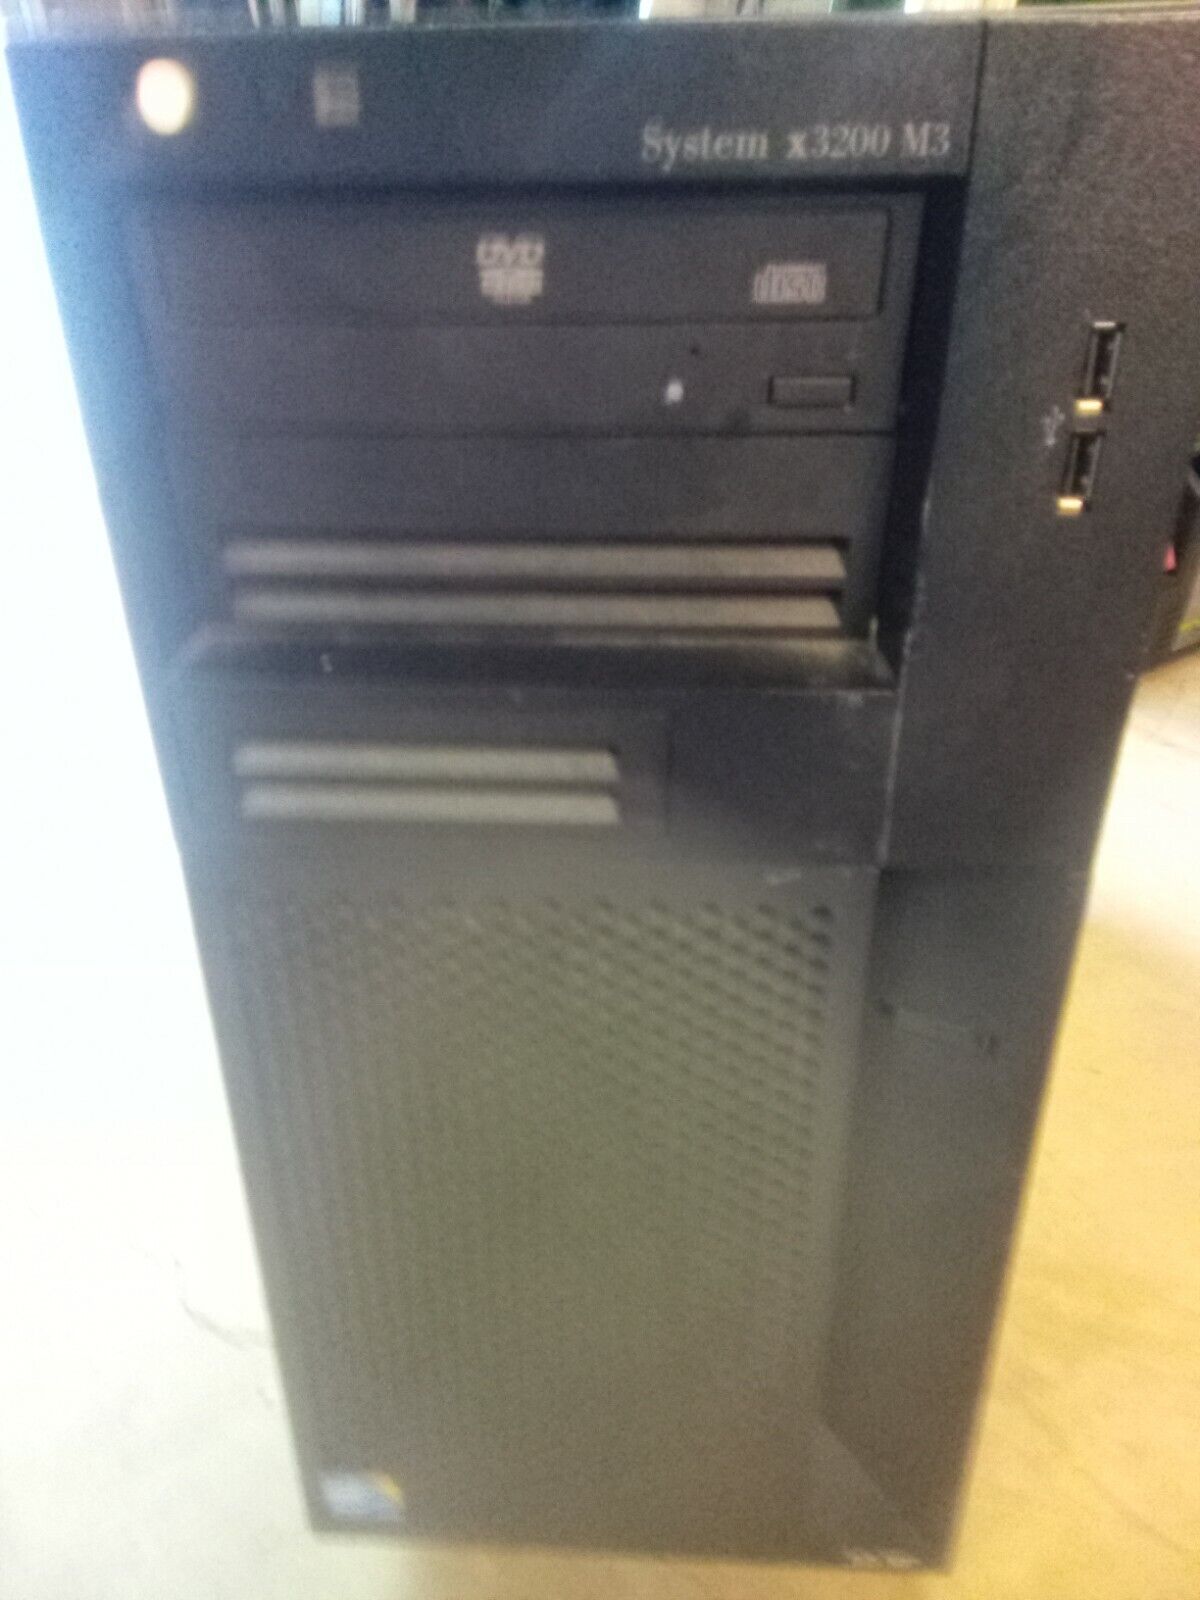 IBM X3200 M3 Server Barely Used Intel Xeon